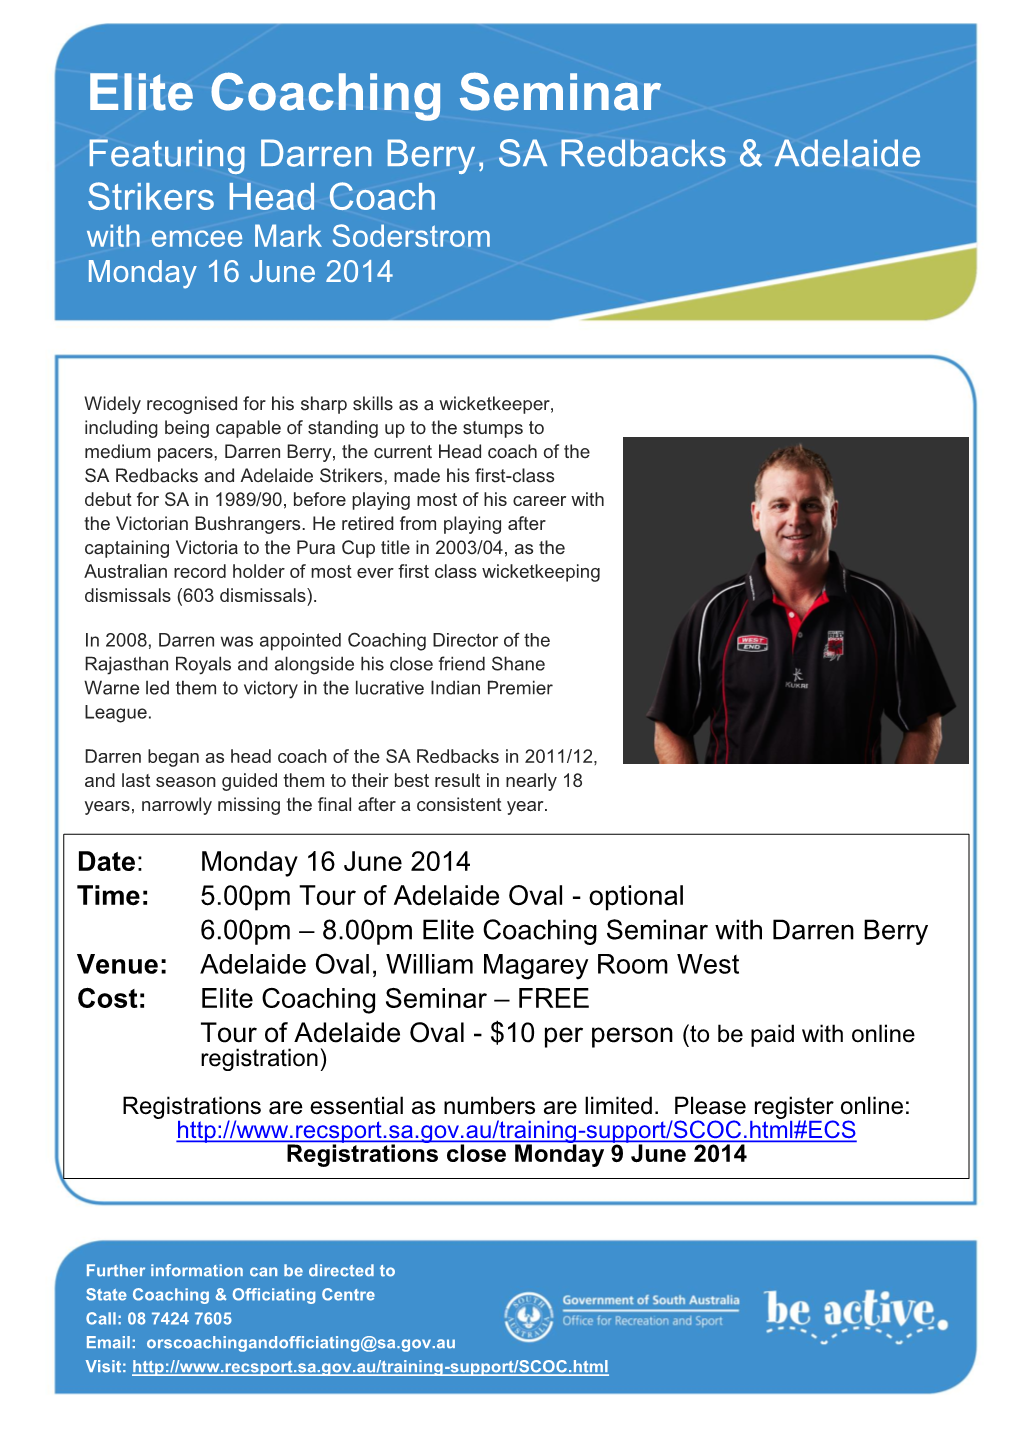 Elite Coaching Seminar Featuring Darren Berry, SA Redbacks & Adelaide Strikers Head Coach with Emcee Mark Soderstrom Monday 16 June 2014